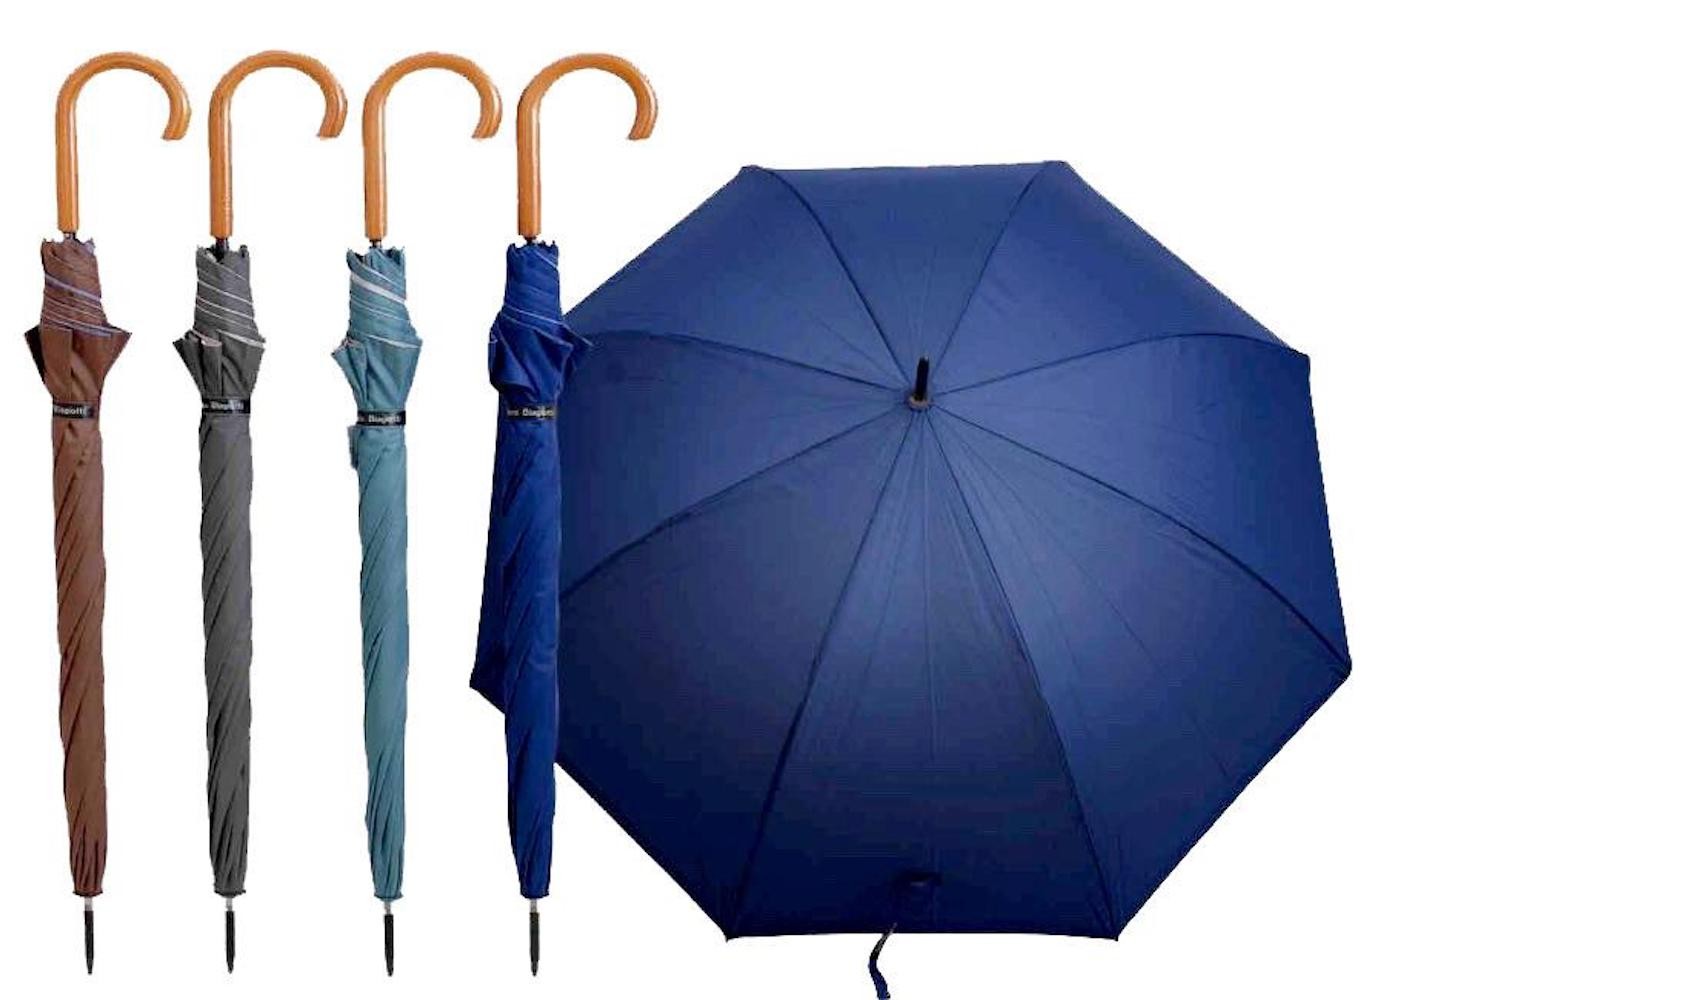 Deštník Laura Biagiotti 1